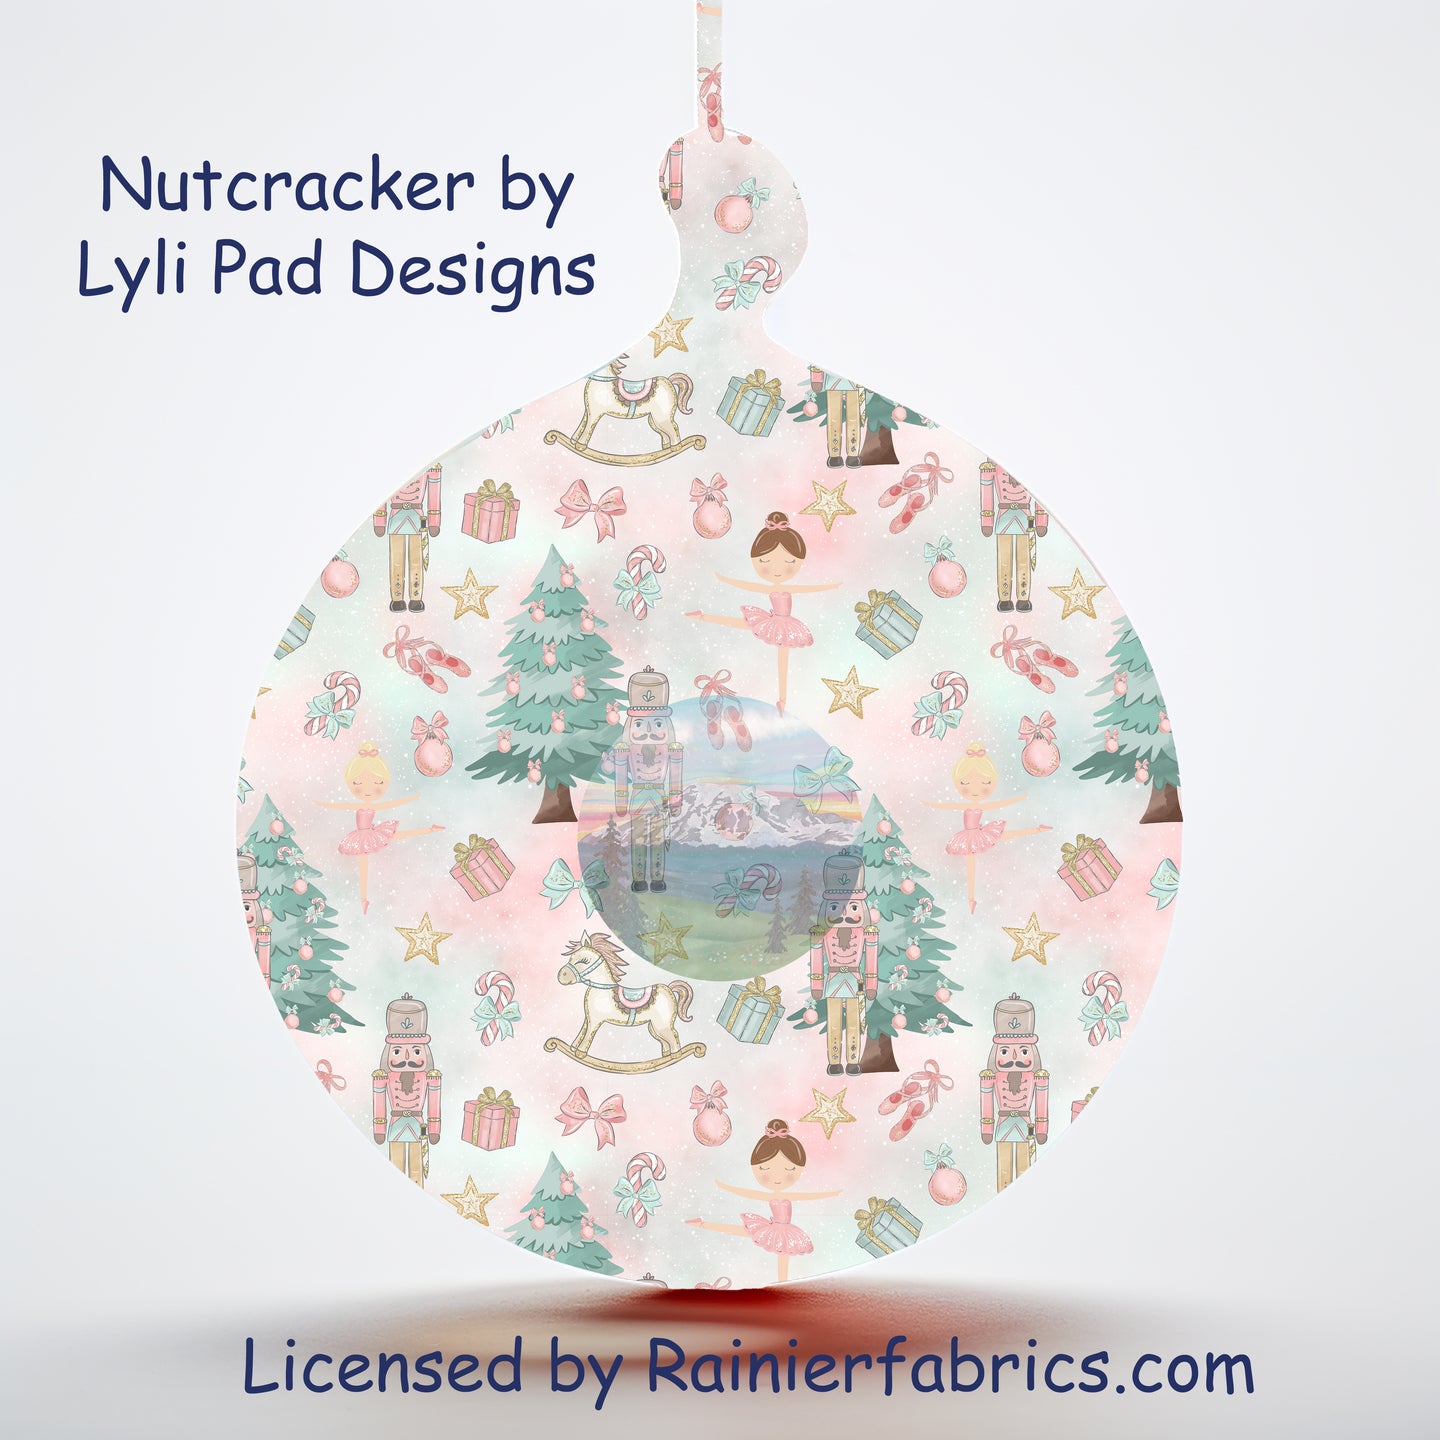 Nutcracker by LyliPad Designs